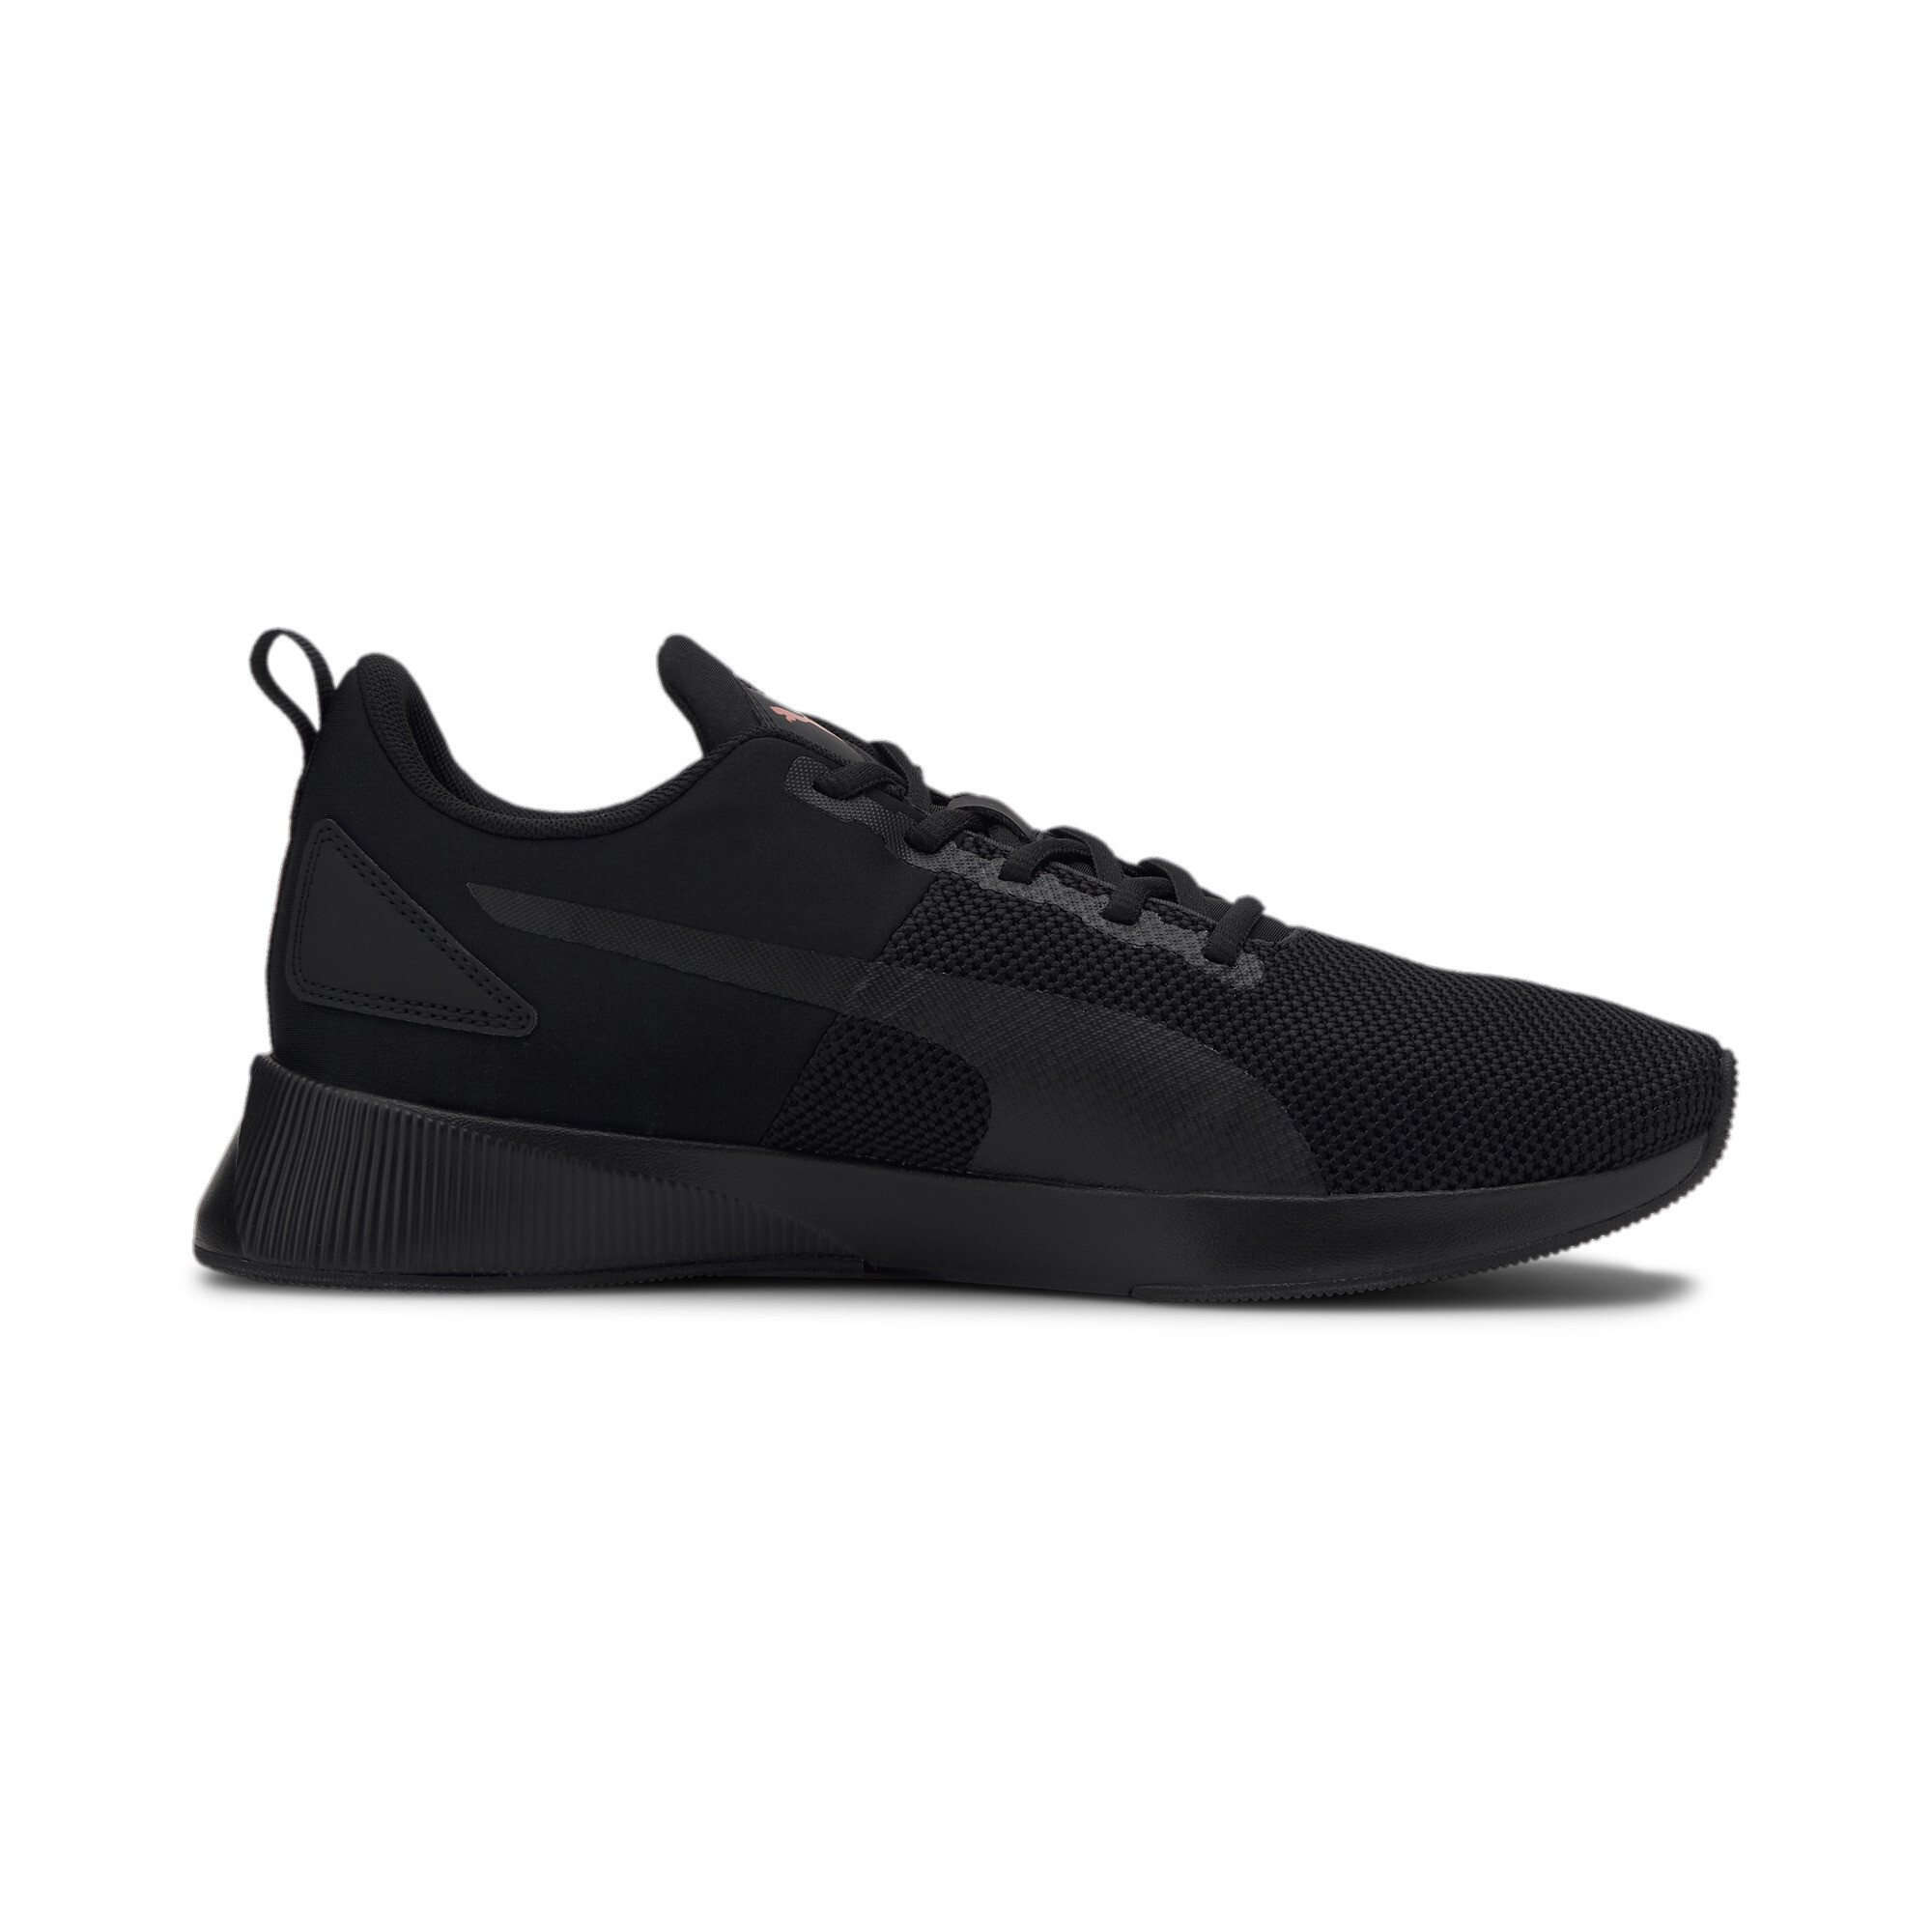 Men's PUMA Flyer Running Shoes In Black, Size EU 40.5